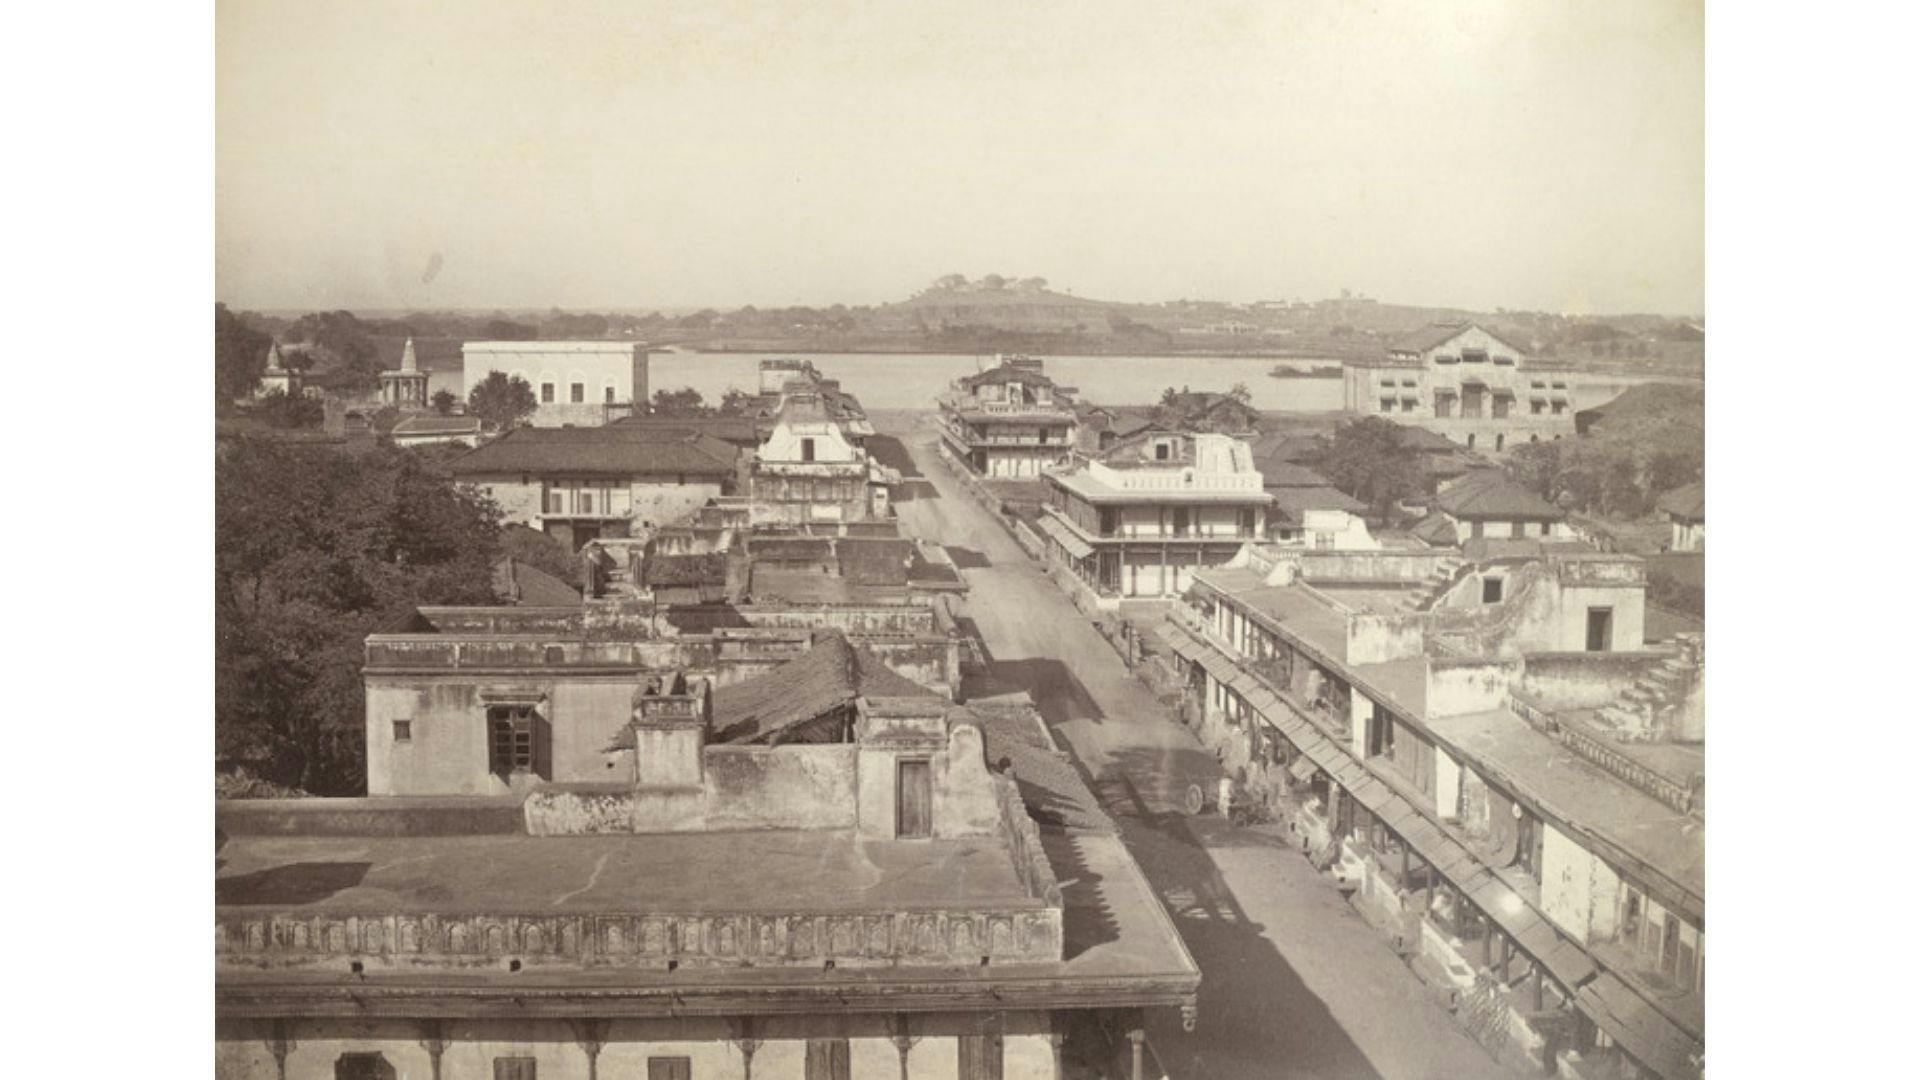 General View of Sitabuldi in Nagpur during 1860s